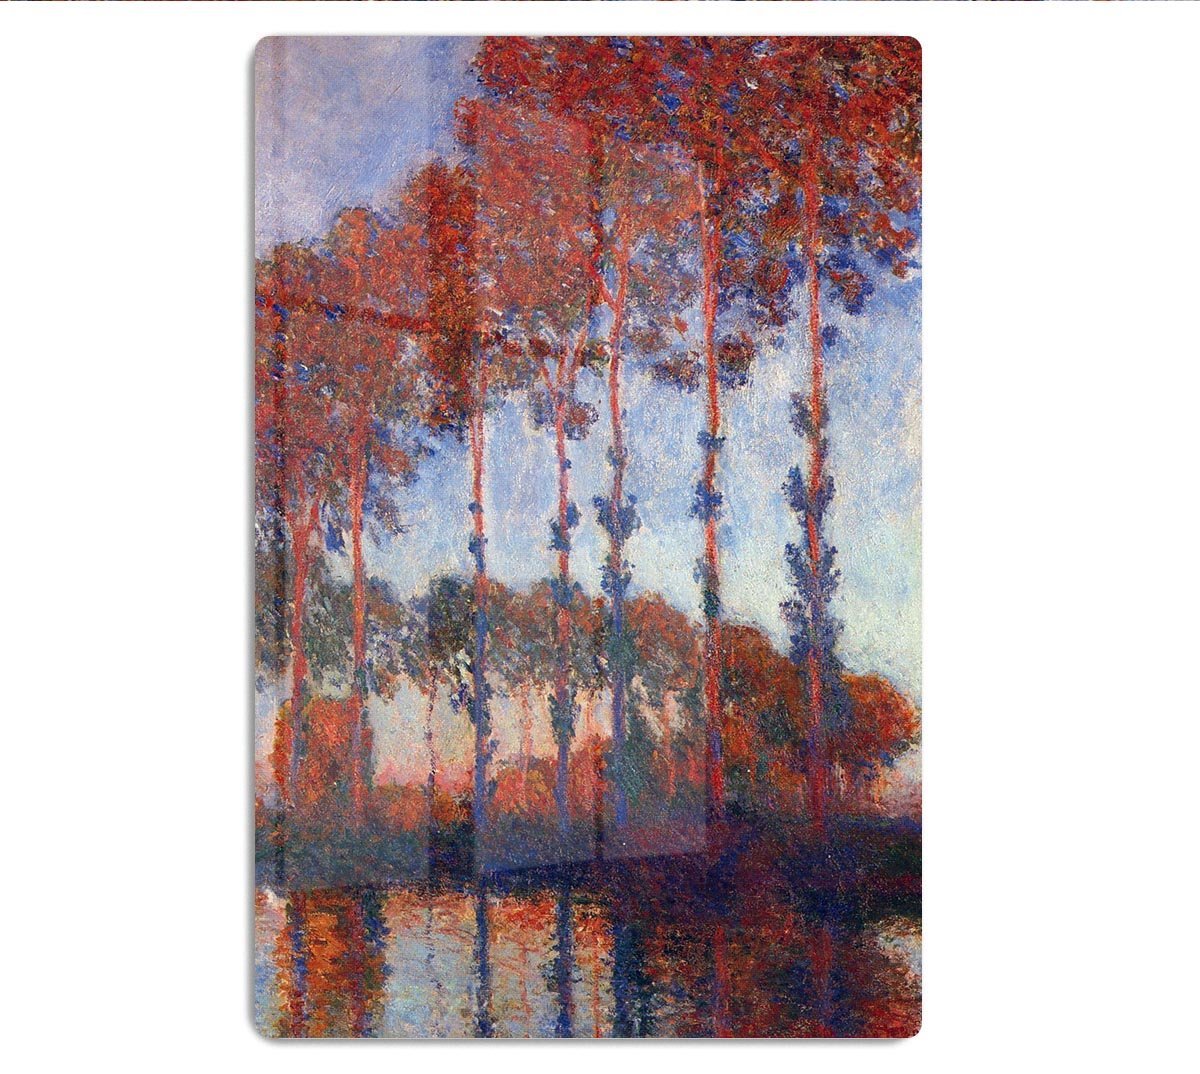 Poplars by Monet HD Metal Print